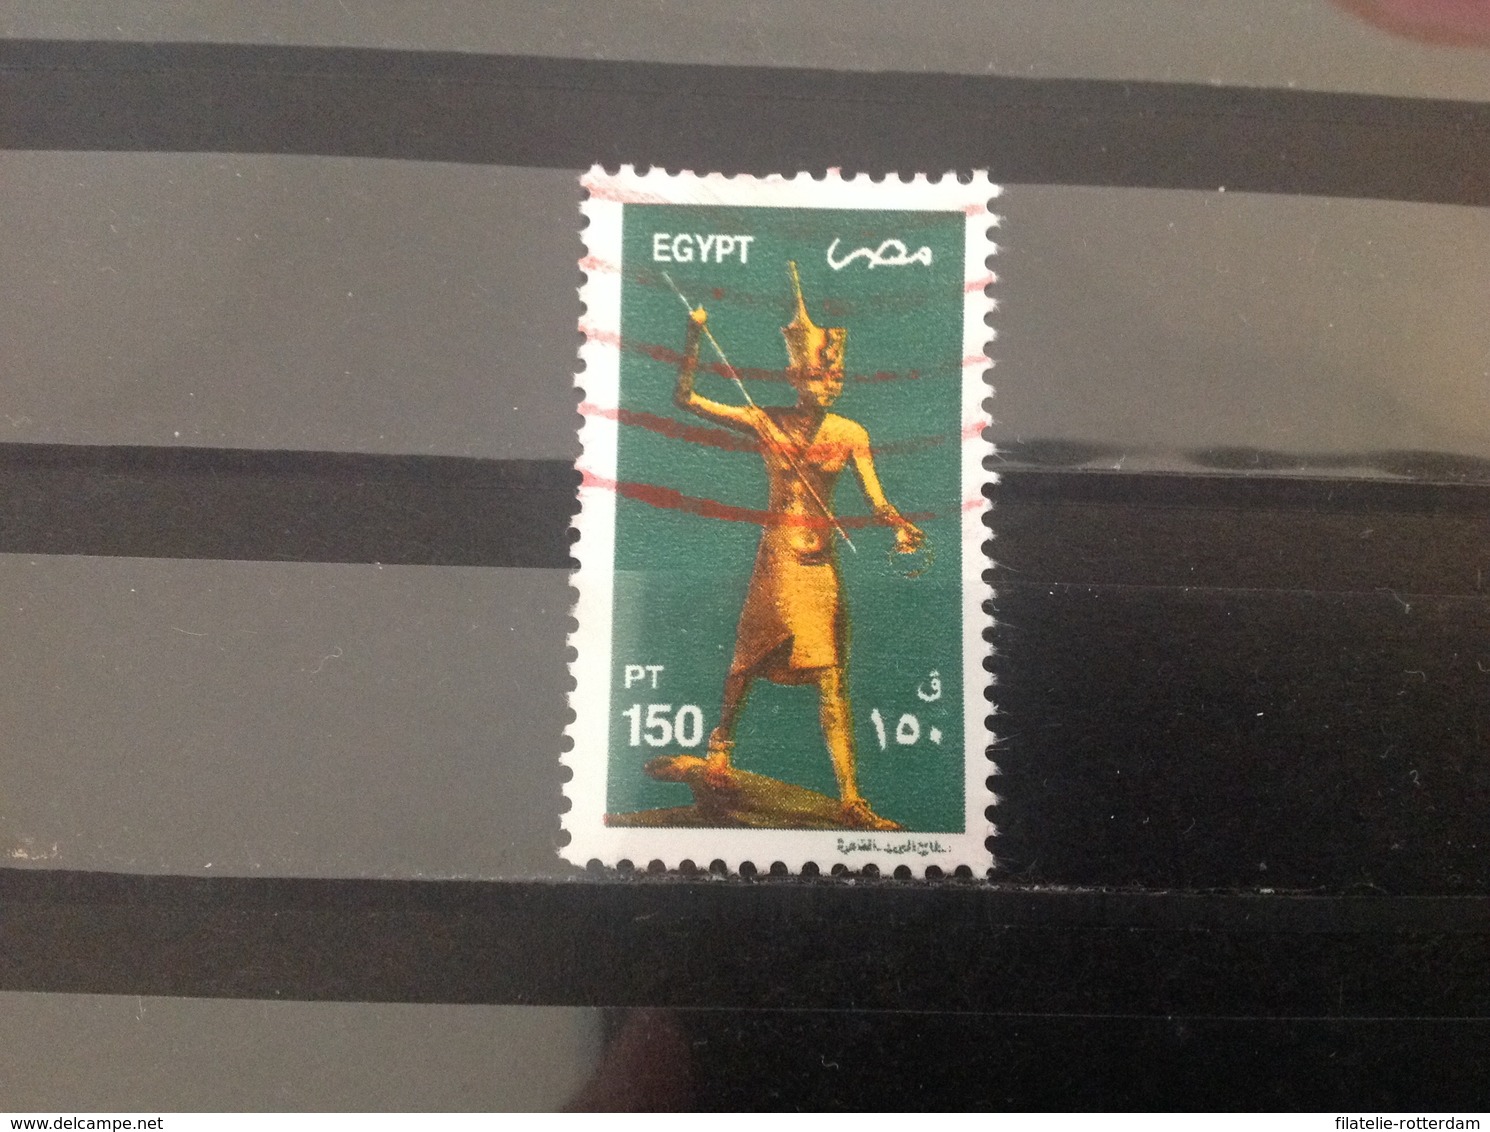 Egypte / Egypt - Toetanchamon (150) 2002 - Gebraucht